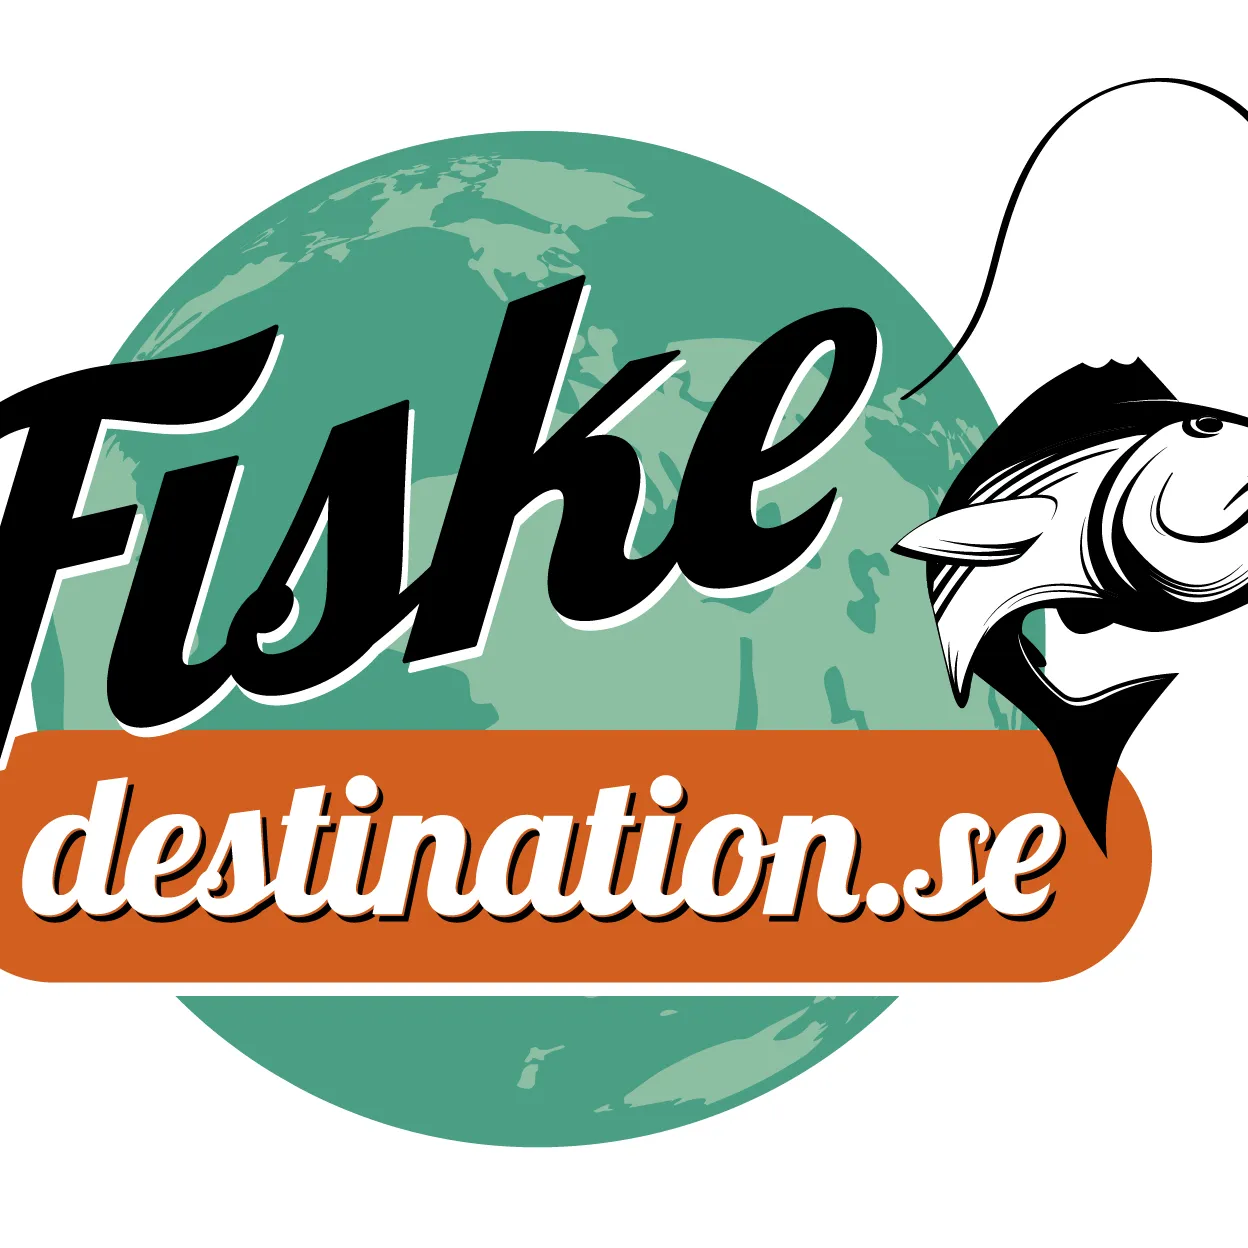 fiskedestination.se